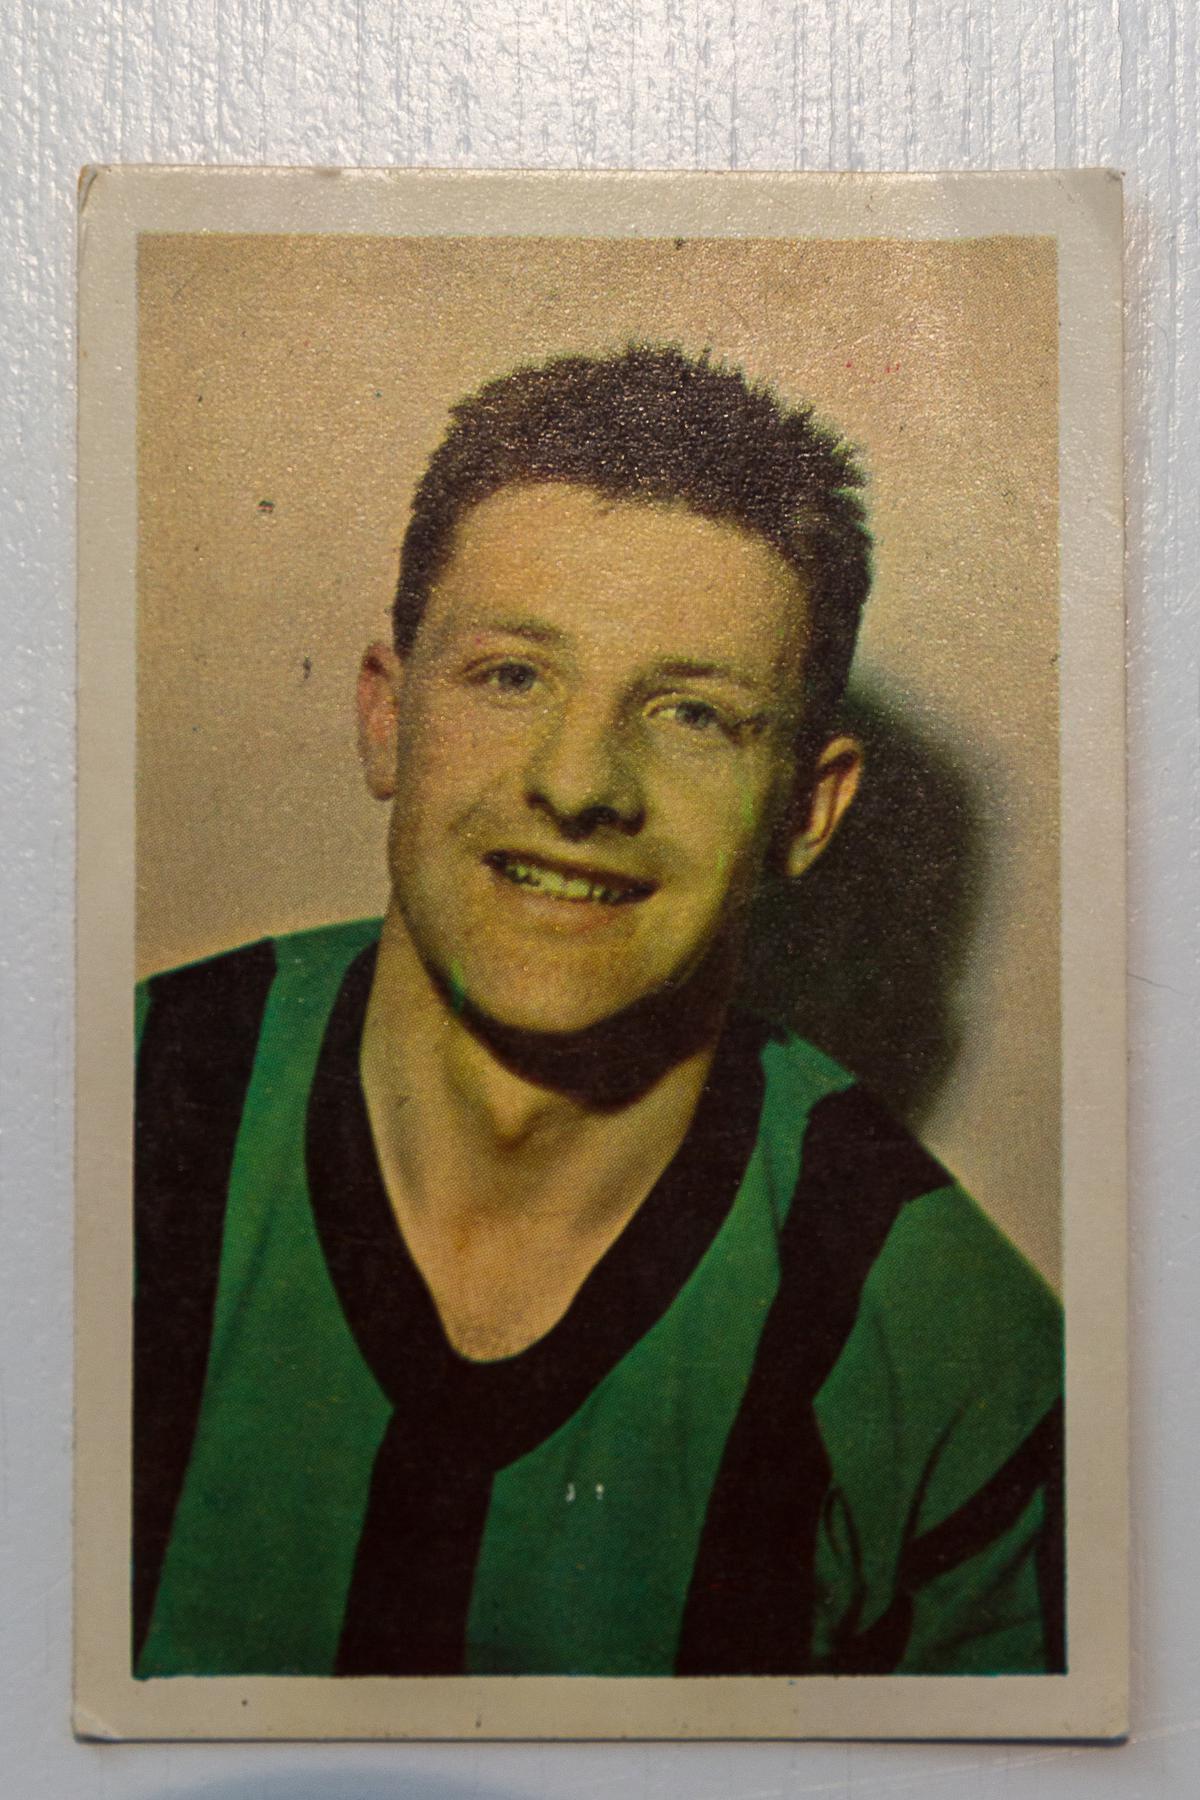 Tina's vader Phillemon, die ooit uitkwam voor het eerste elftal van Cercle Brugge.